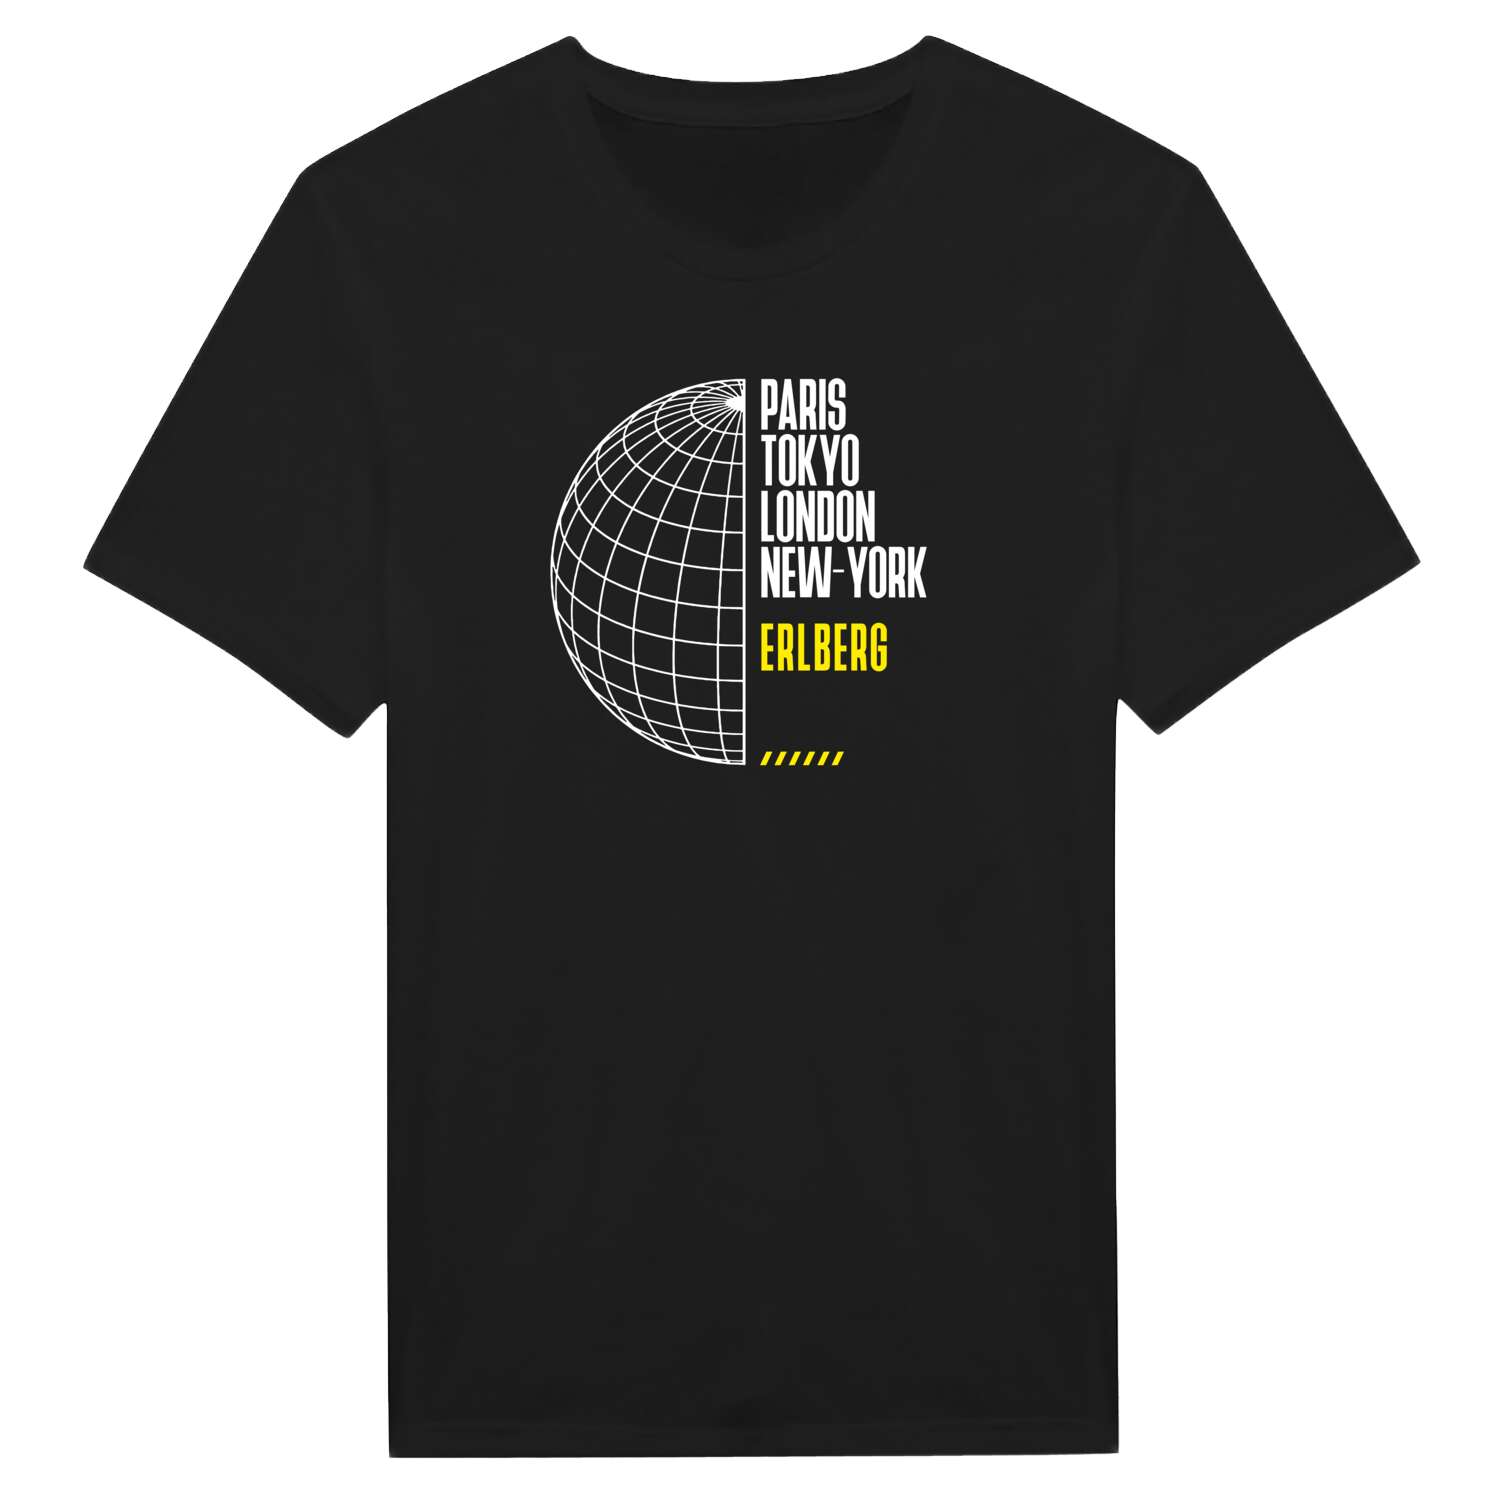 Erlberg T-Shirt »Paris Tokyo London«